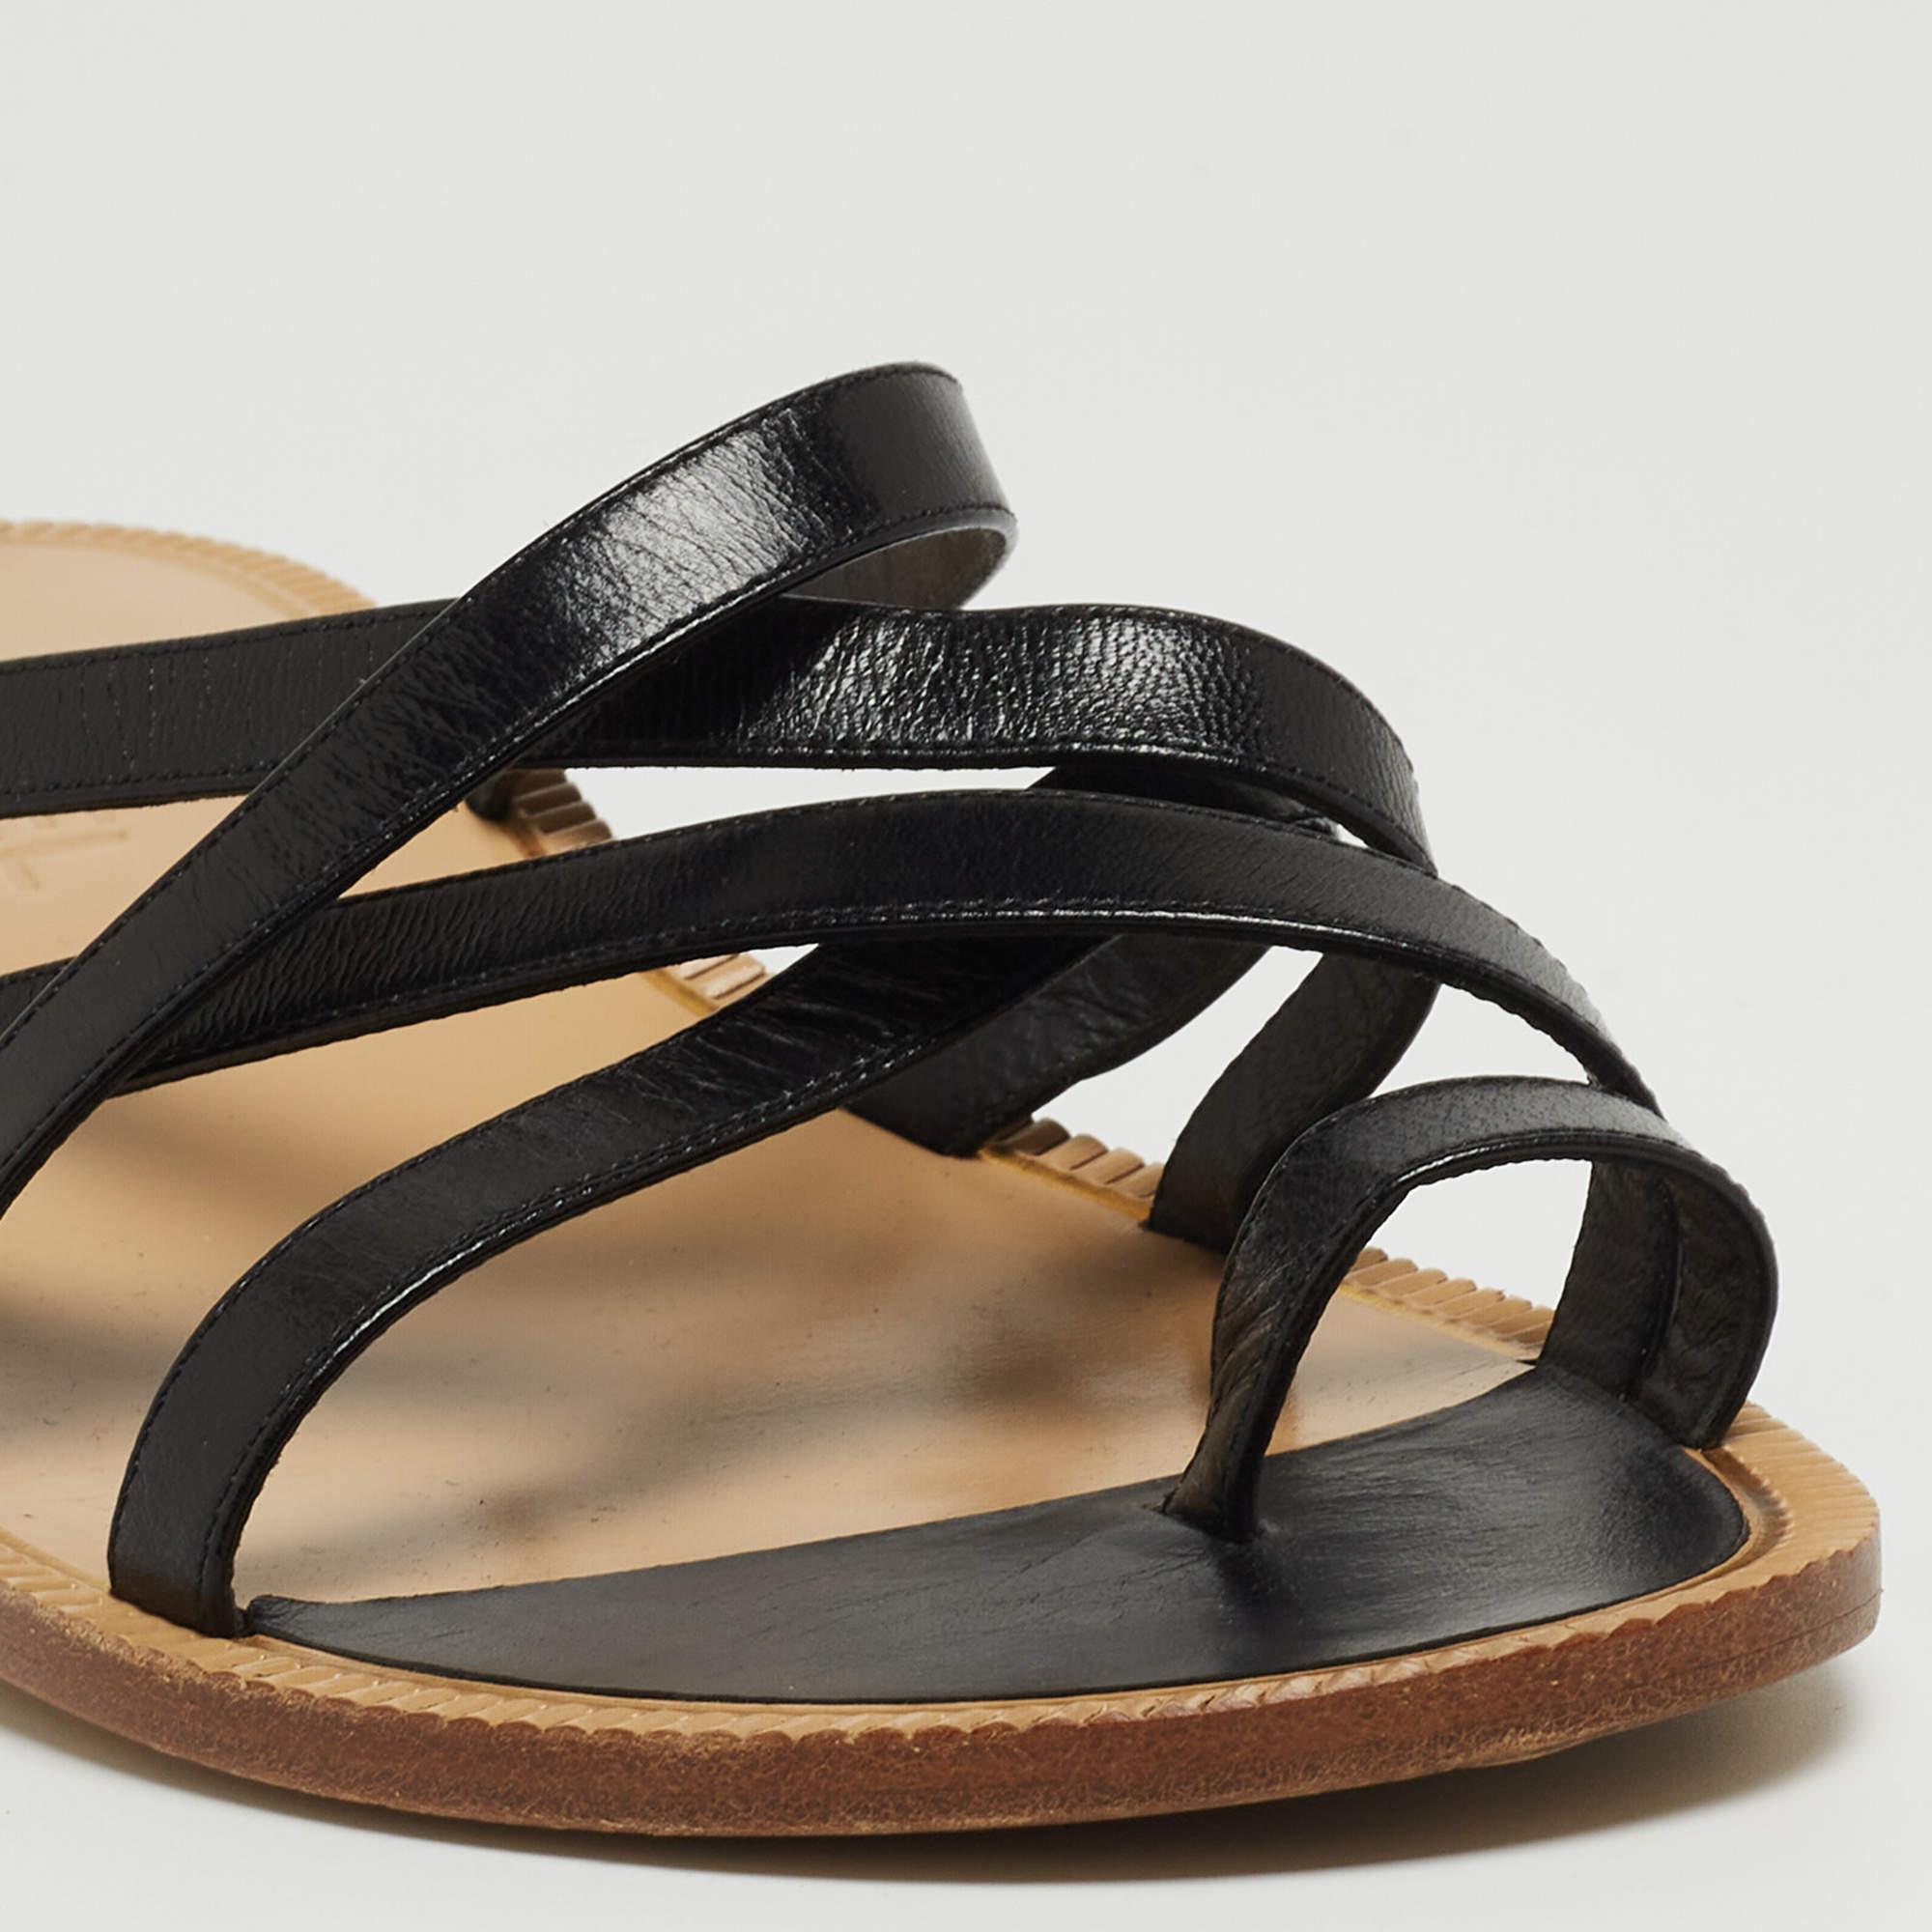 Chanel Black Leather Criss Cross Slide Sandals Size 39 3